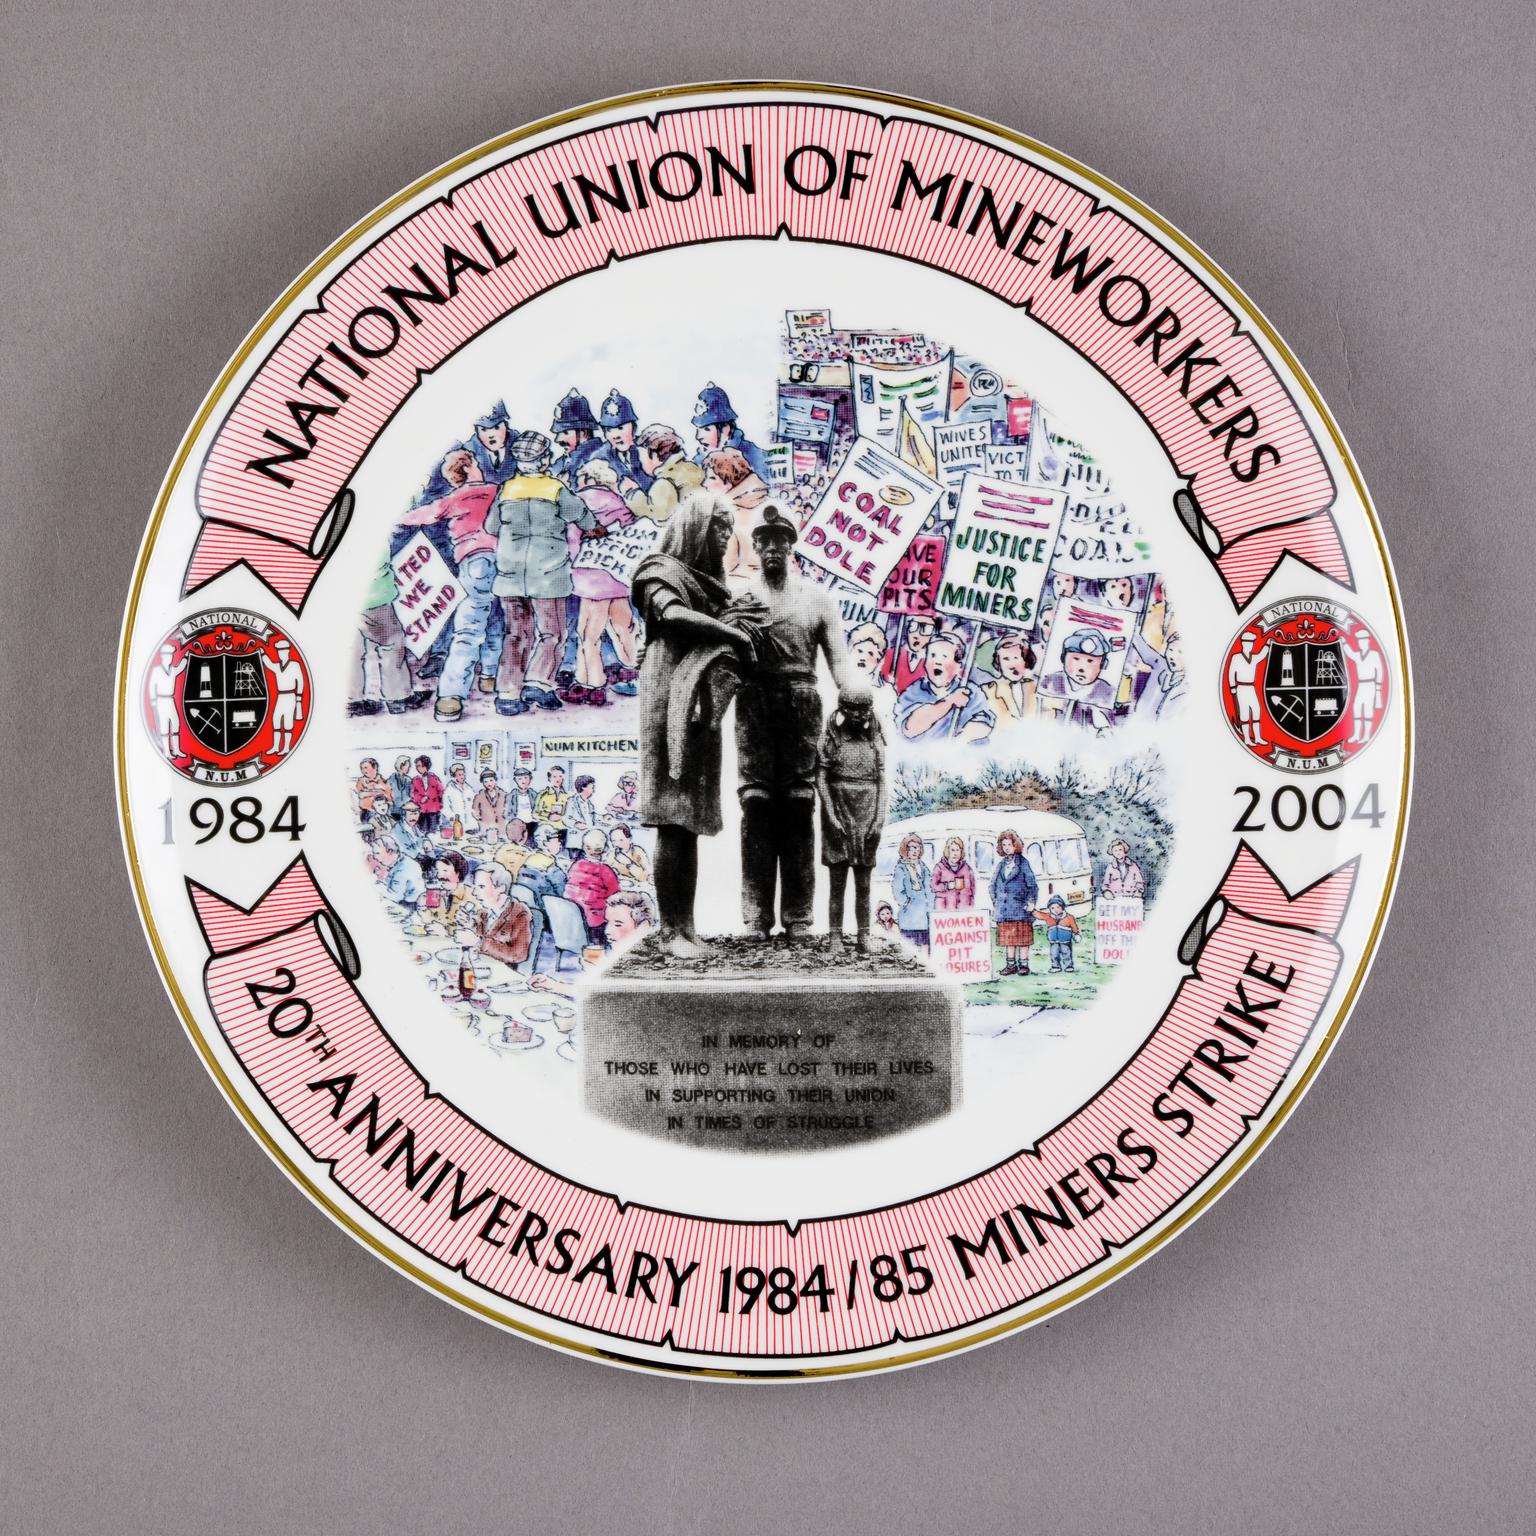 N.U.M. 20th anniversary of miners strike, plate